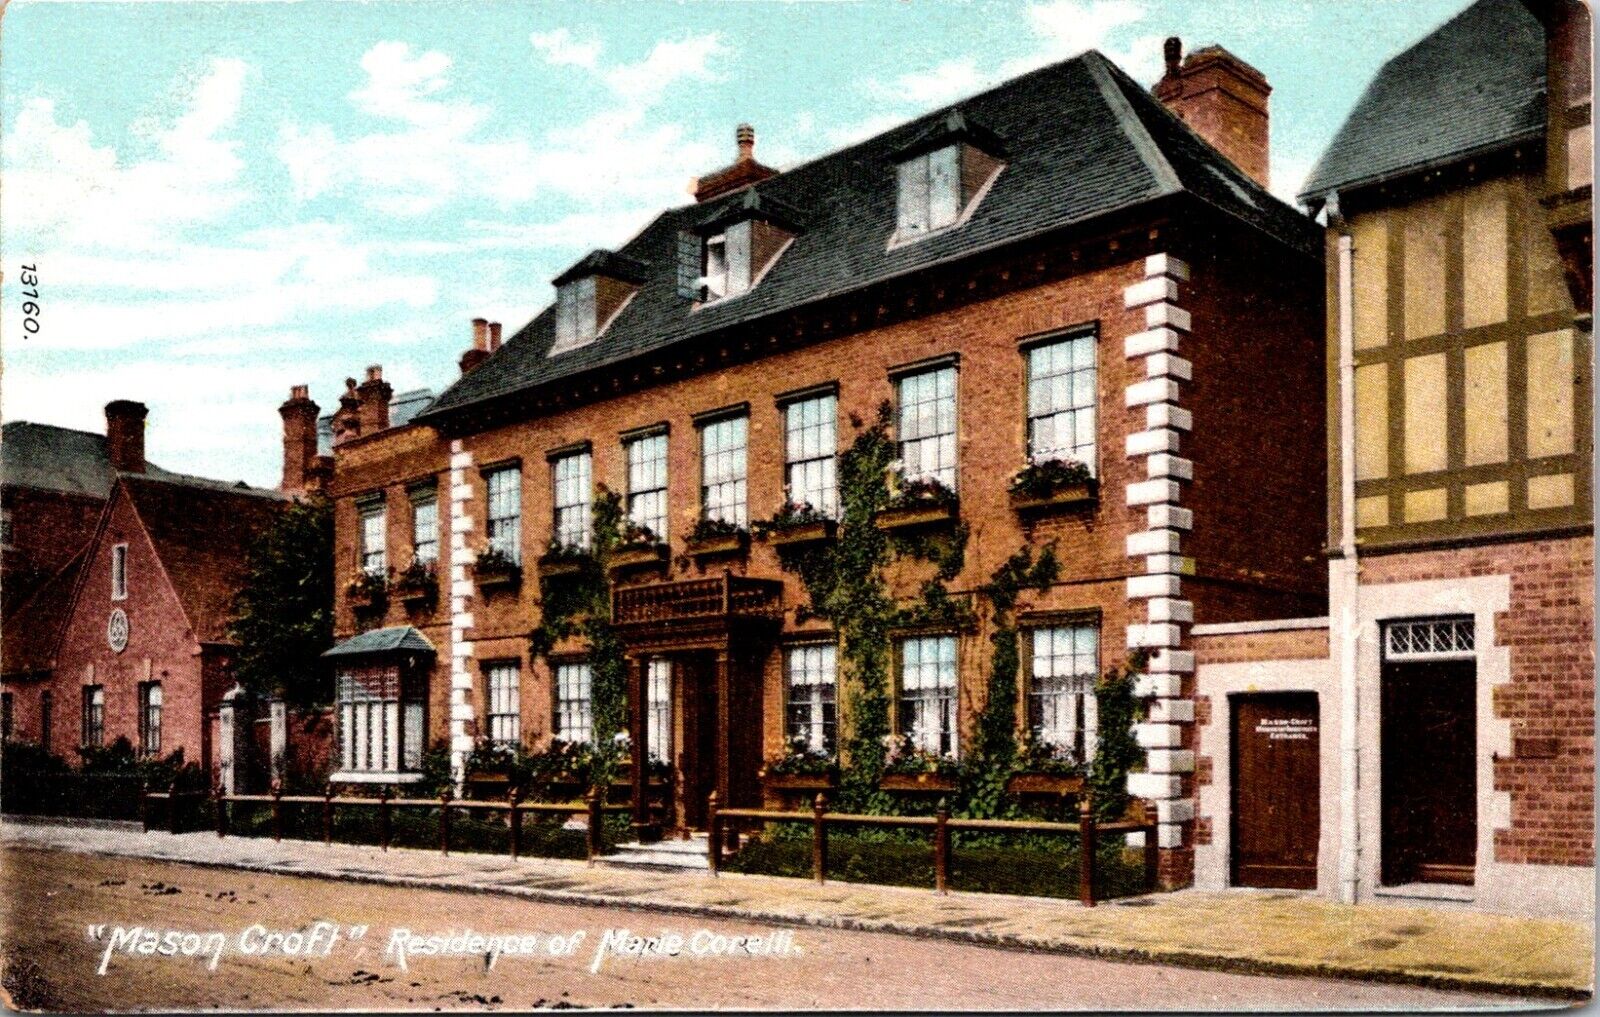 Mason Croft Residence of Marie Corelli Stratford- upon- Avon England Postcard